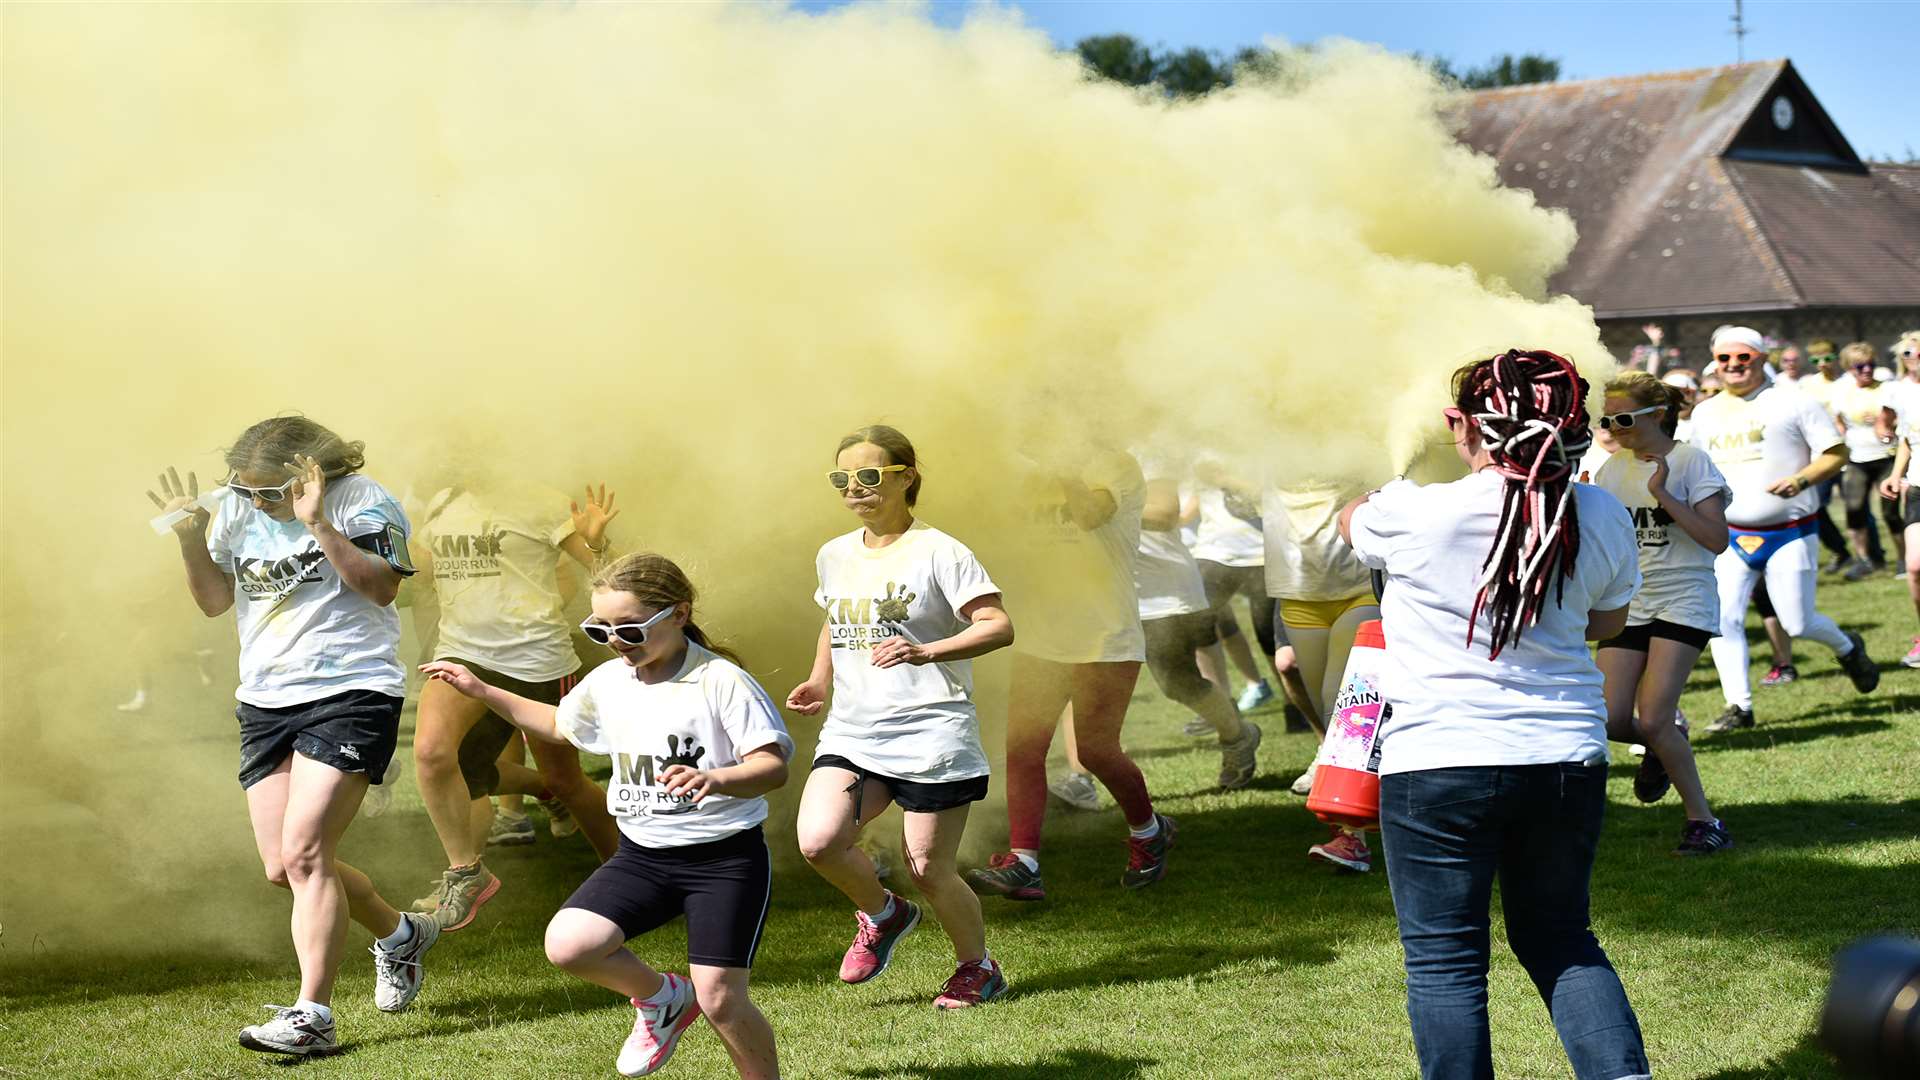 KM Colour Run participants make their way through a cloud of yellow powder.